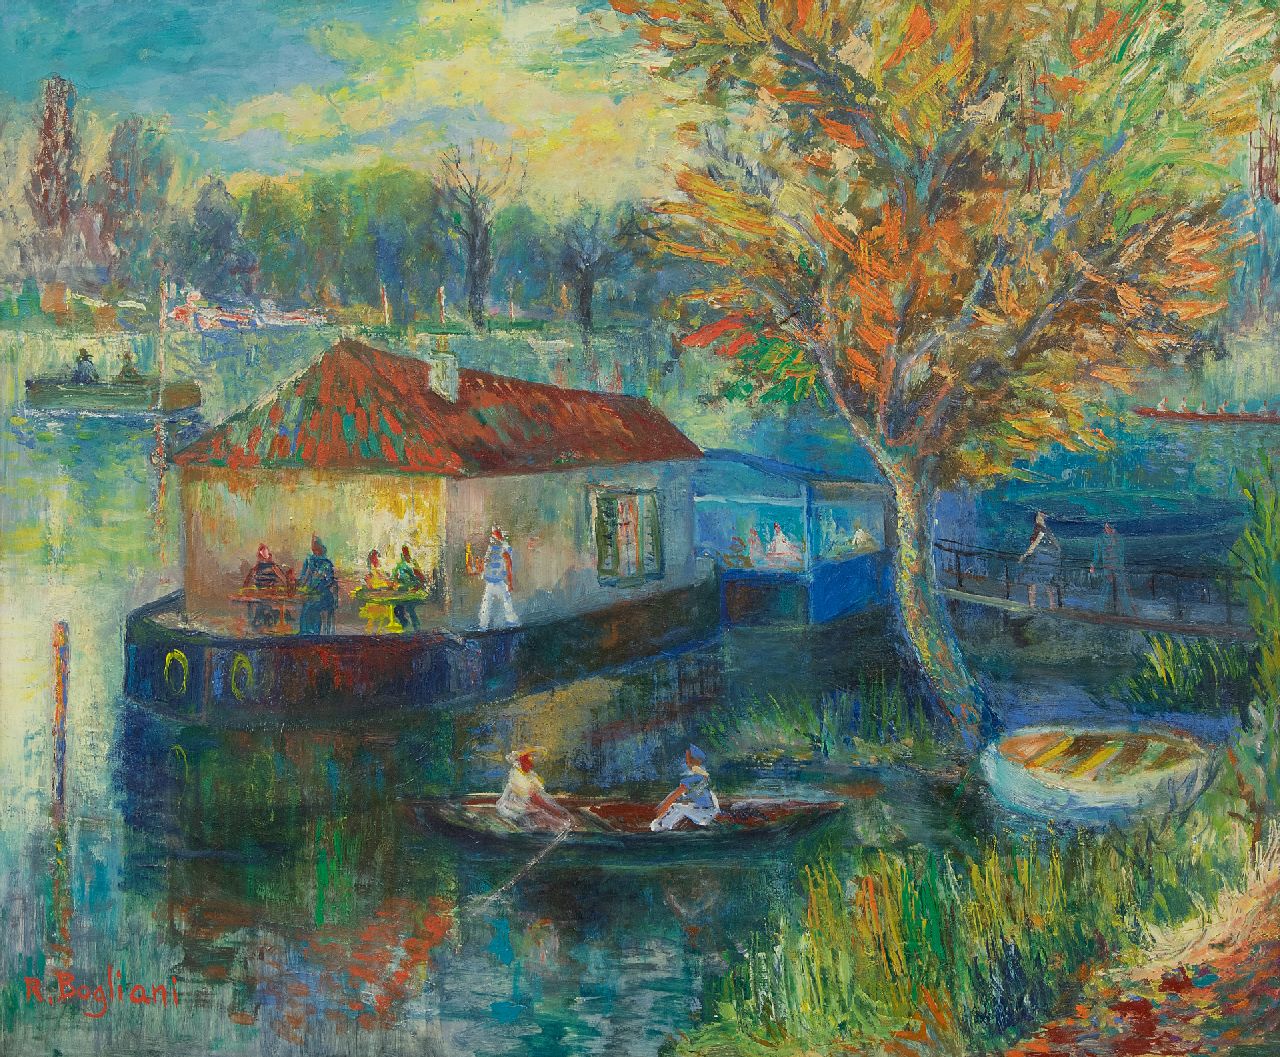 Bogliani R.  | Robert. Bogliani | Paintings offered for sale | summer café on the river, oil on board 50.0 x 61.0 cm, signed l.l.